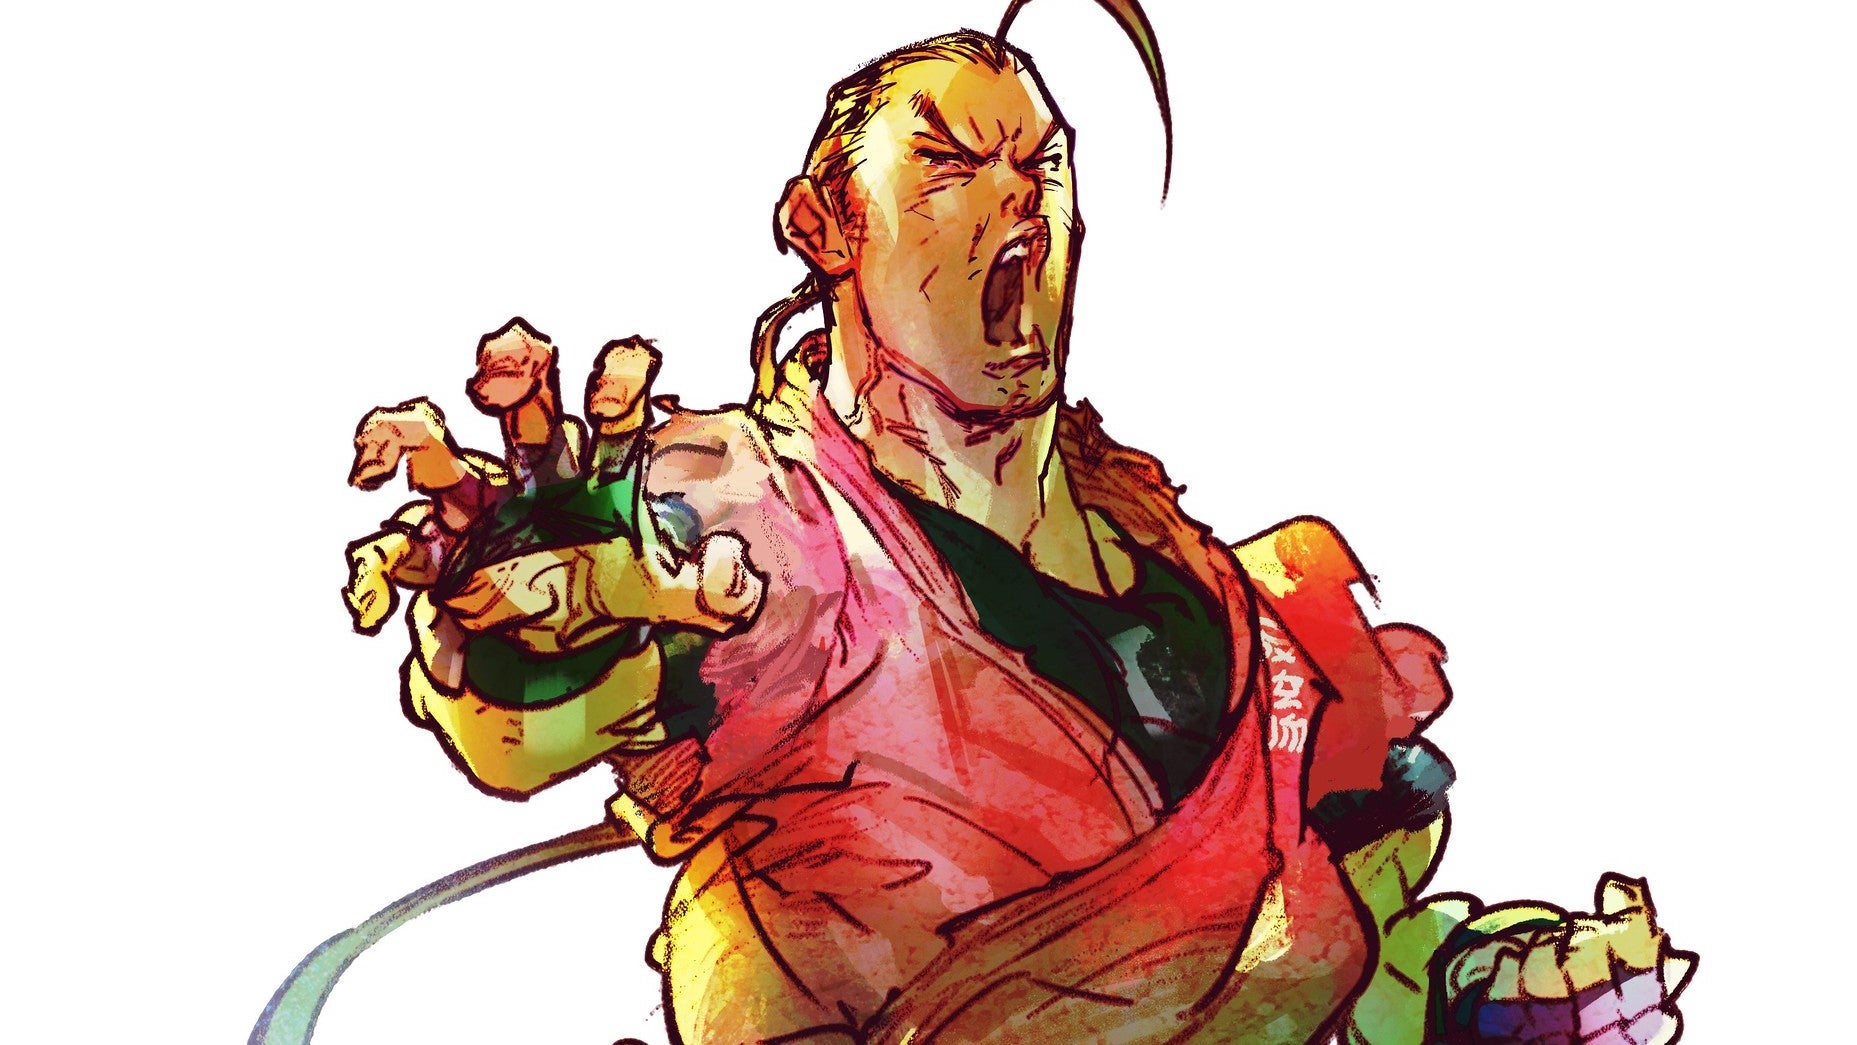 Image for Dan arrives in Street Fighter 5 in February 2021